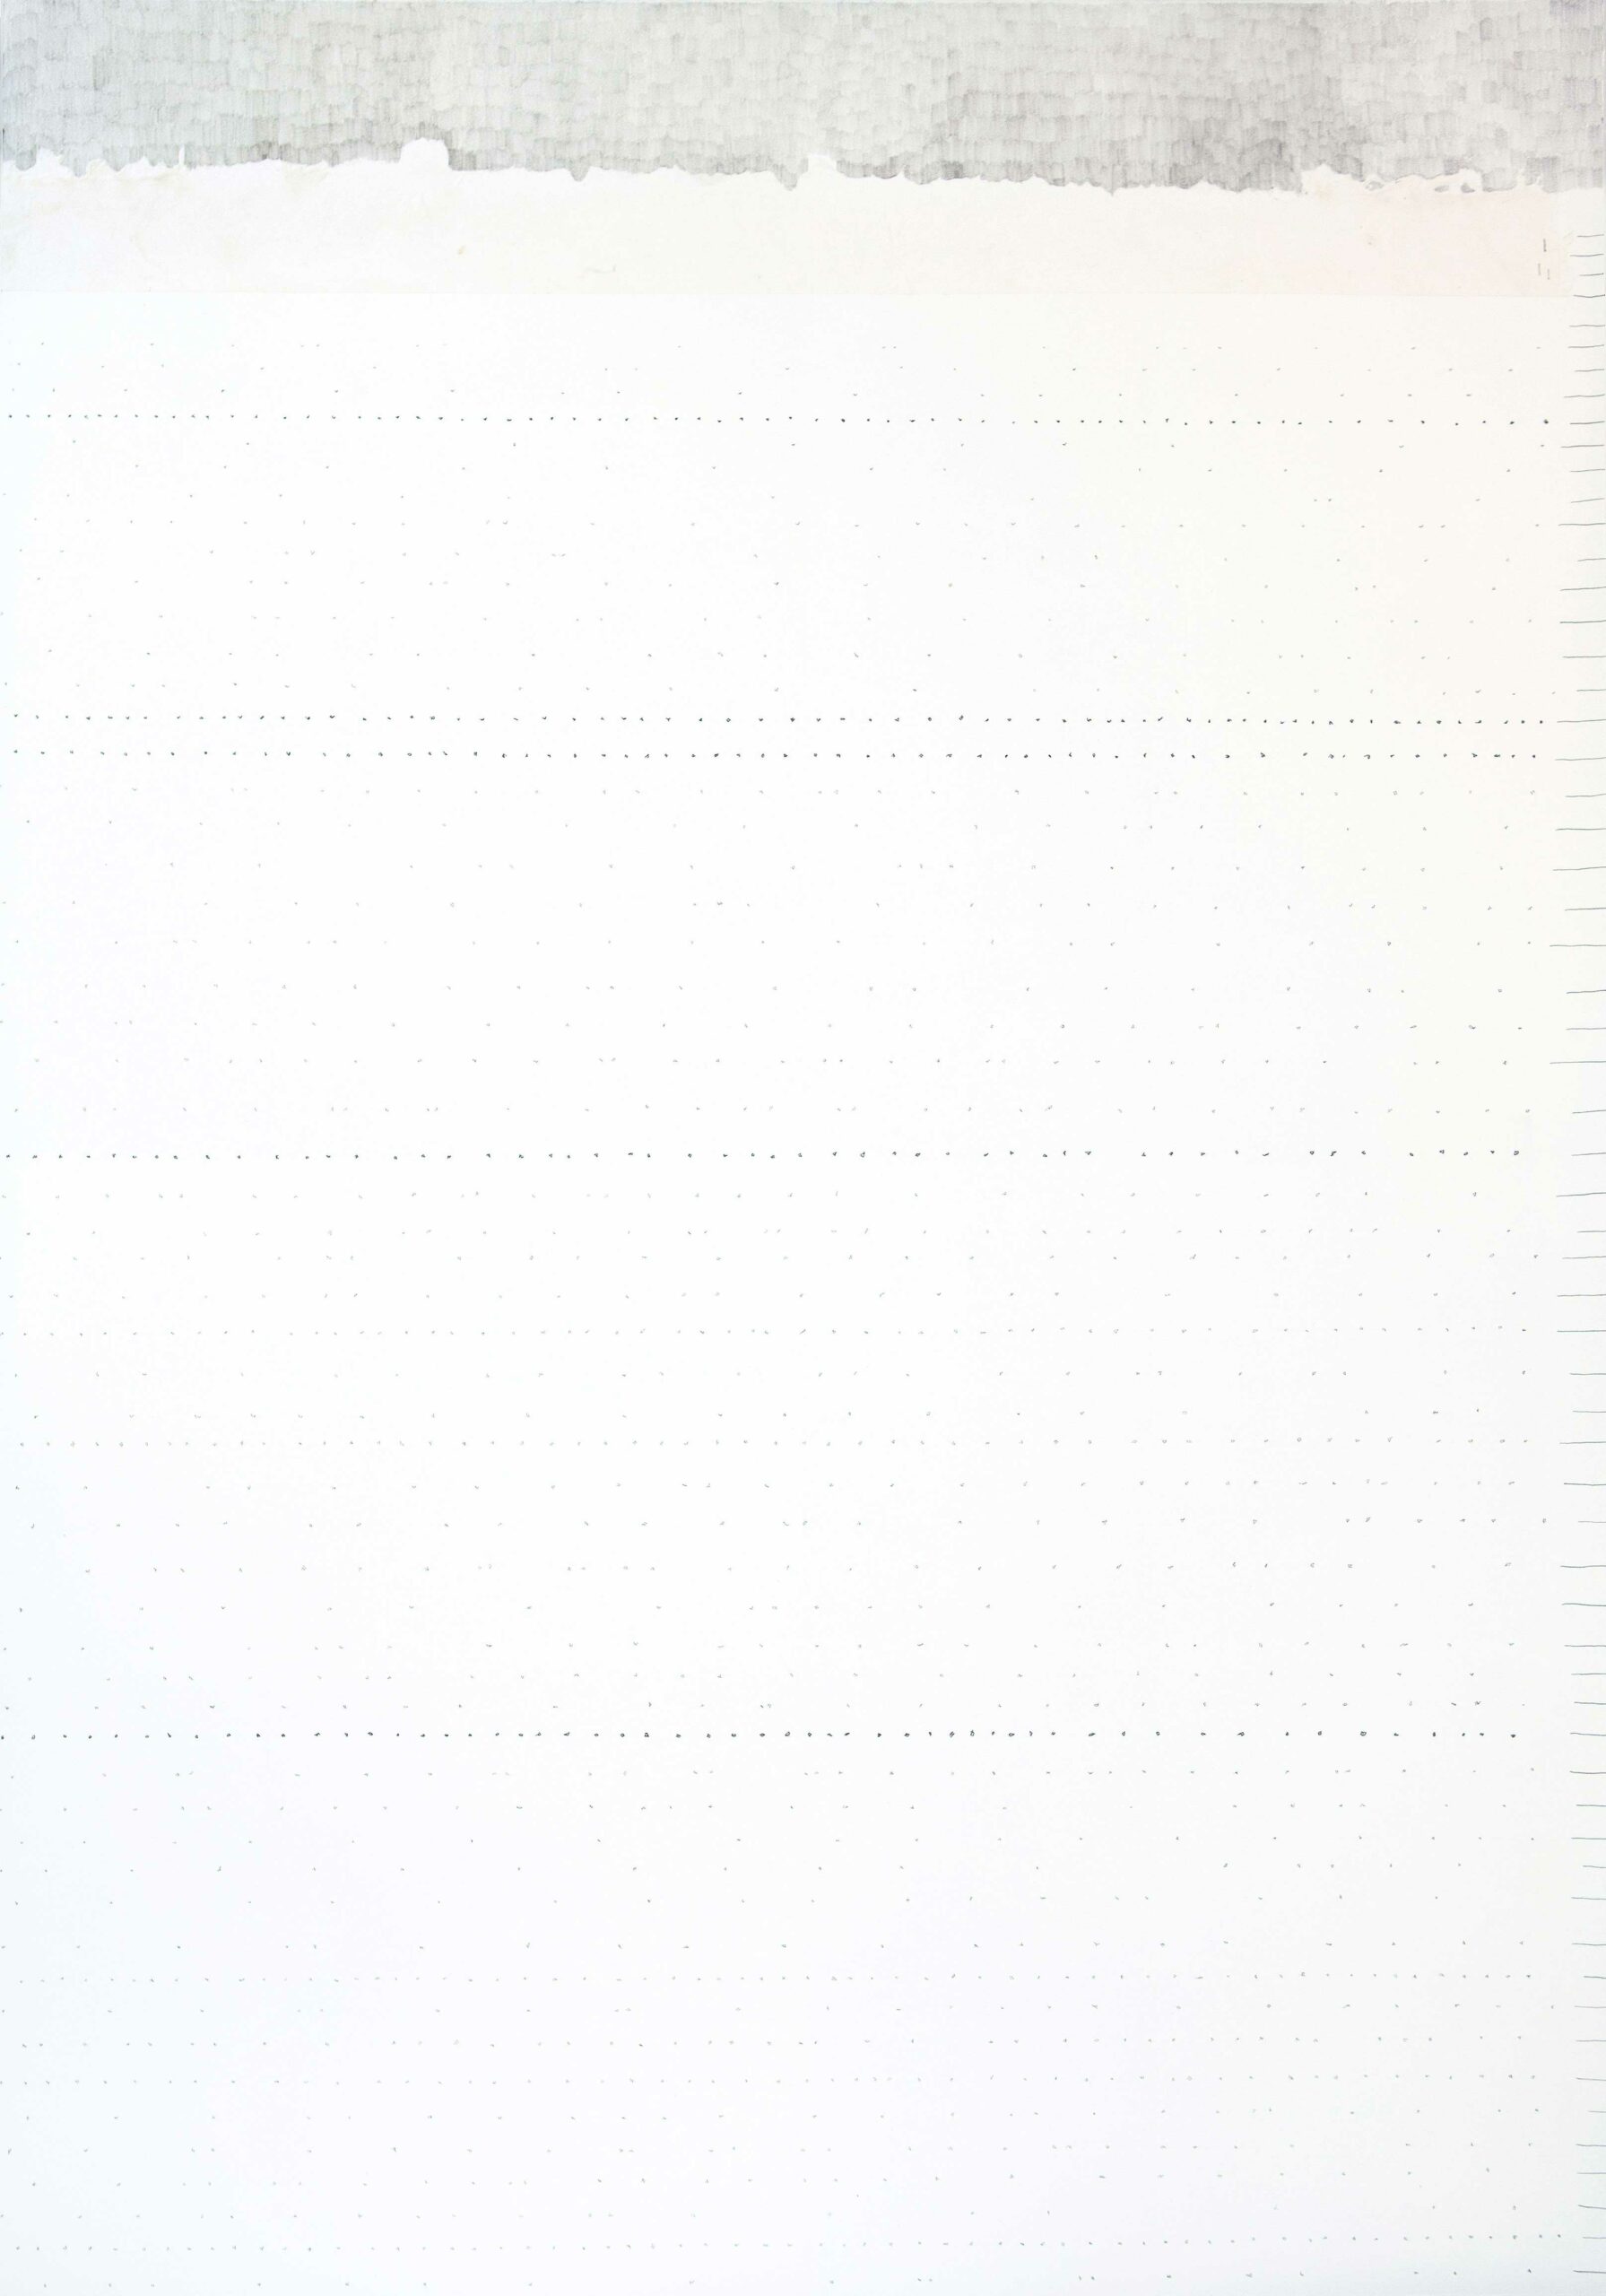 Miriam Salamander, Drawing of dots on white paper